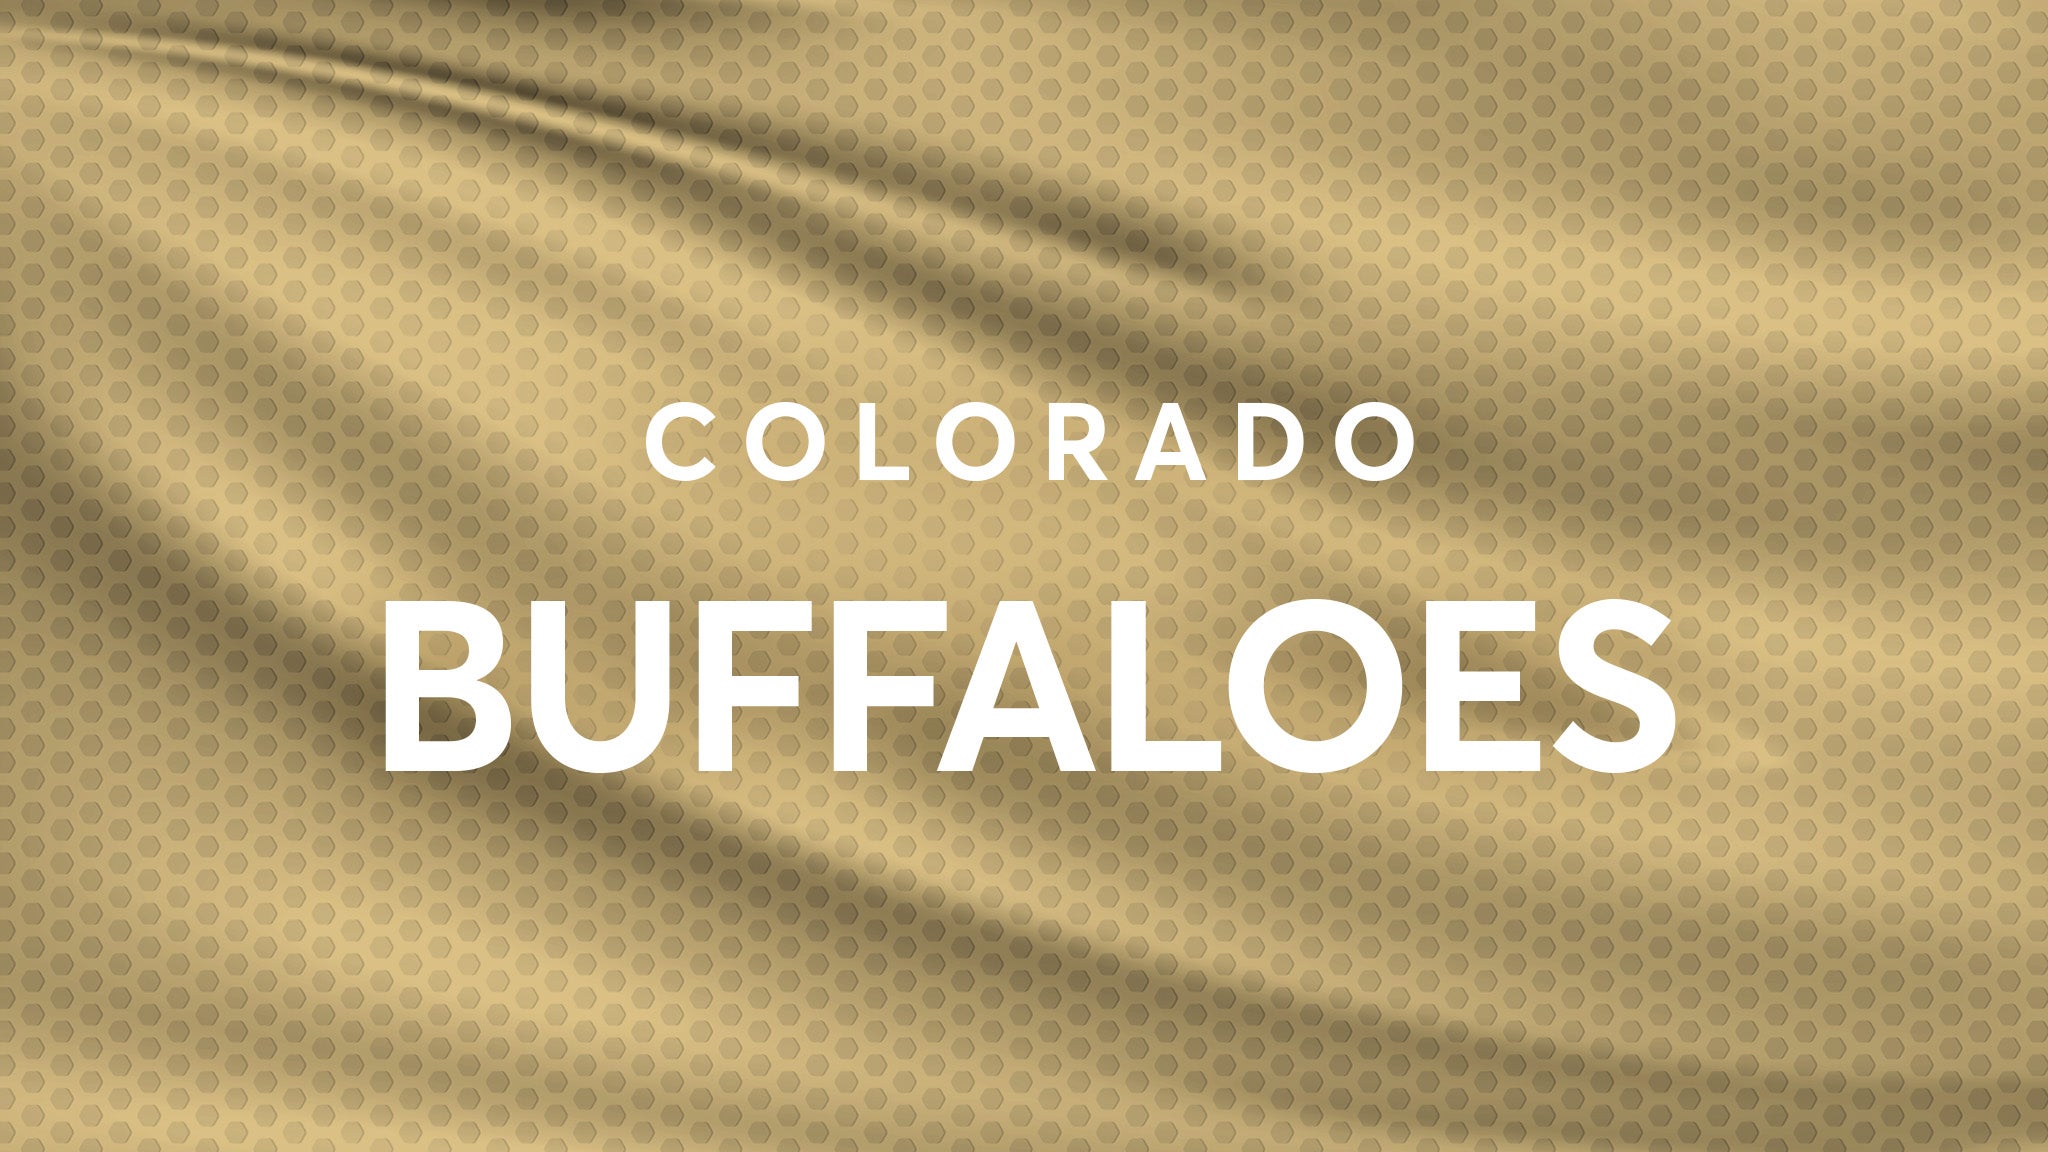 University of Colorado Buffaloes Football